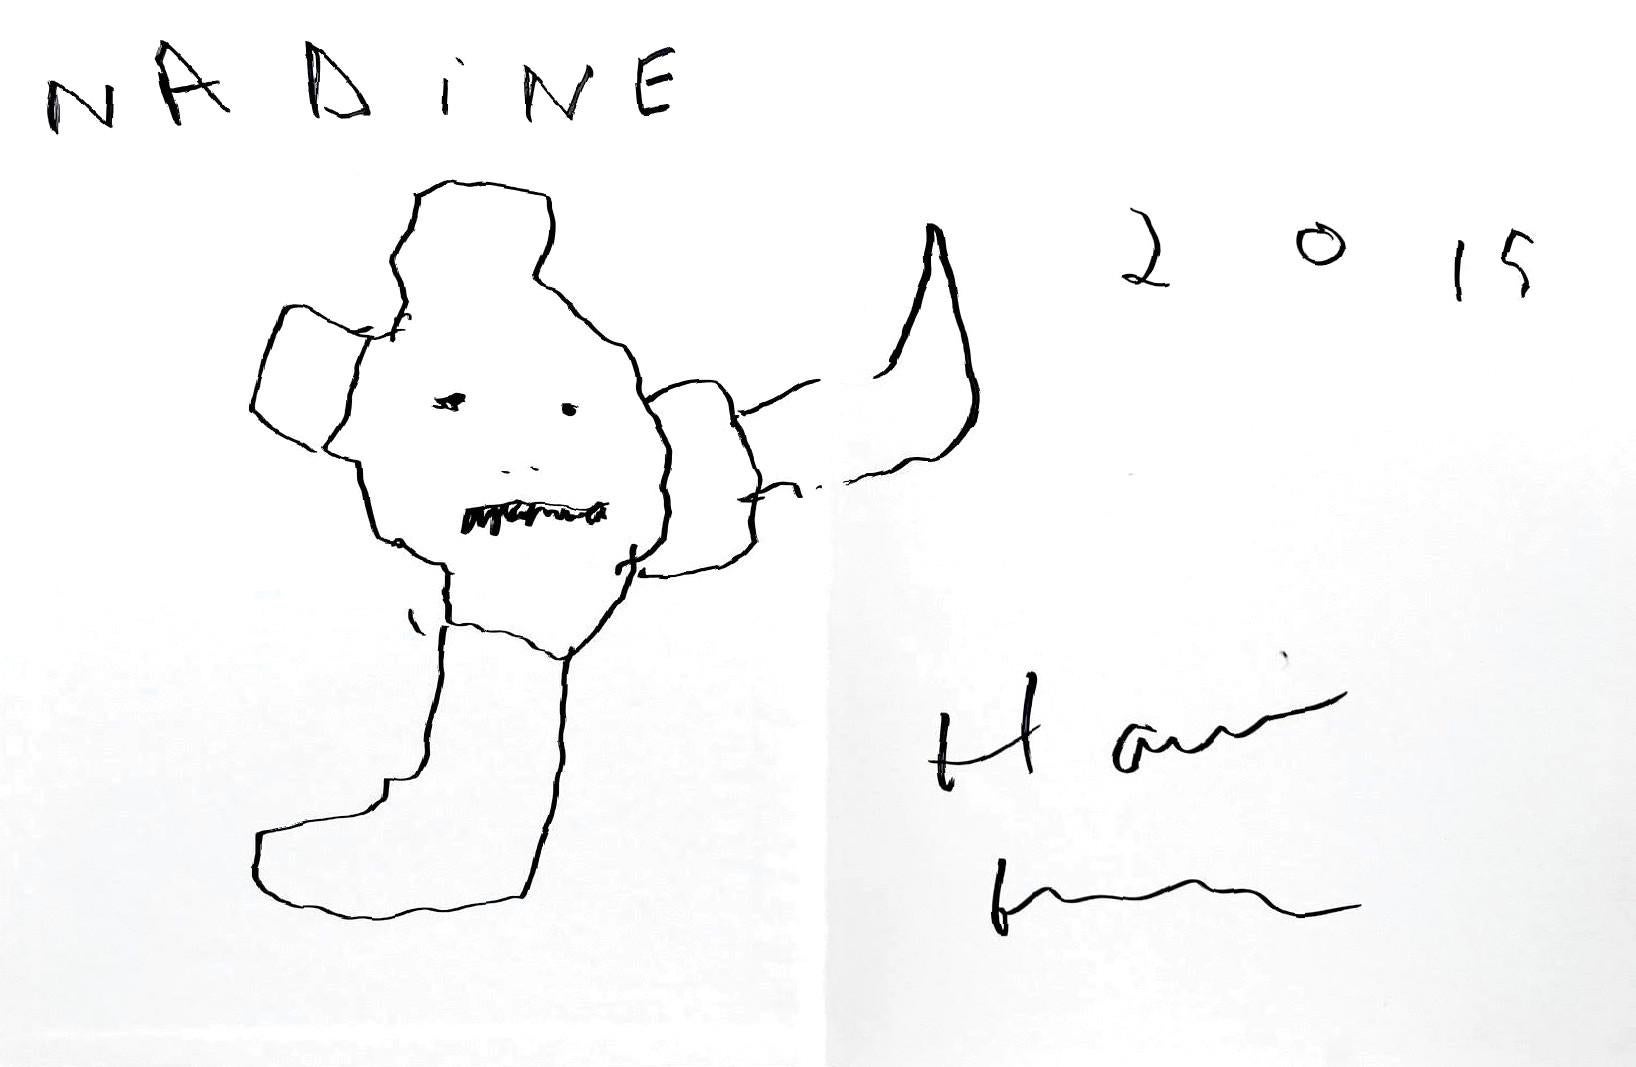 Abstract Drawing Harmony Korine - Dessin original (signé à la main et inscrit à Nadine)